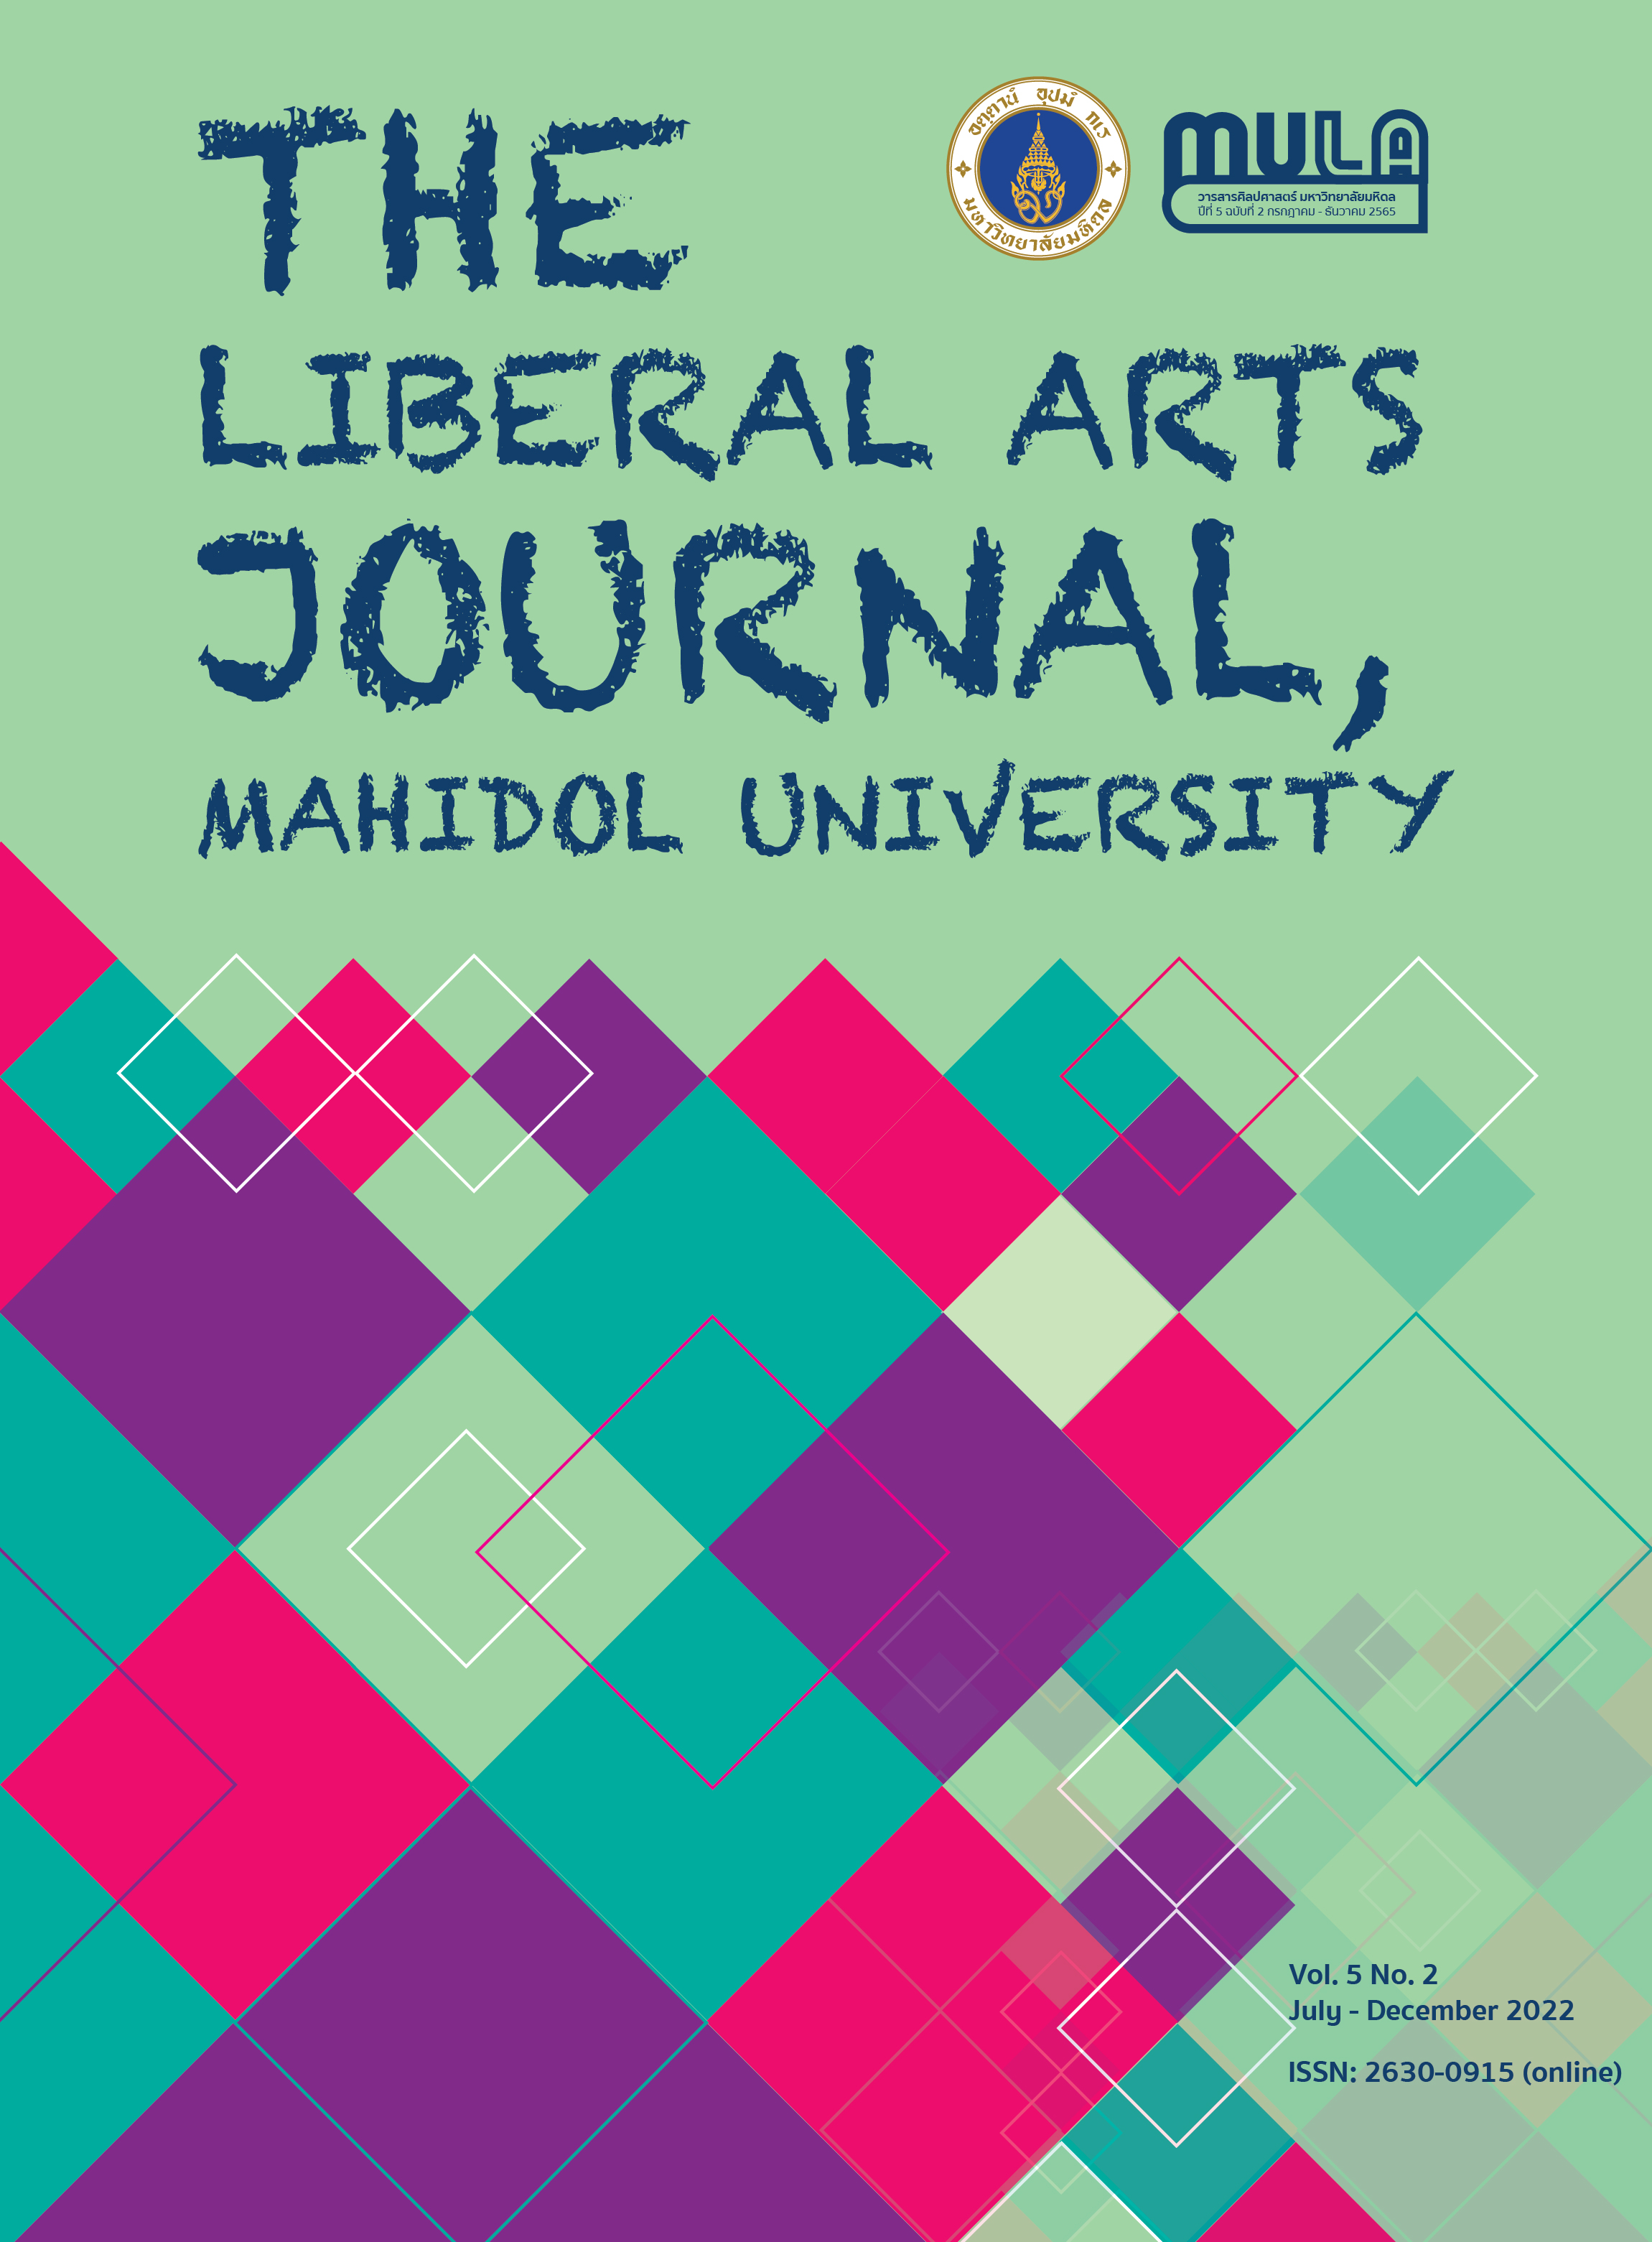 					View Vol. 5 No. 2 (2022): The Liberal Arts Journal, Mahidol University
				